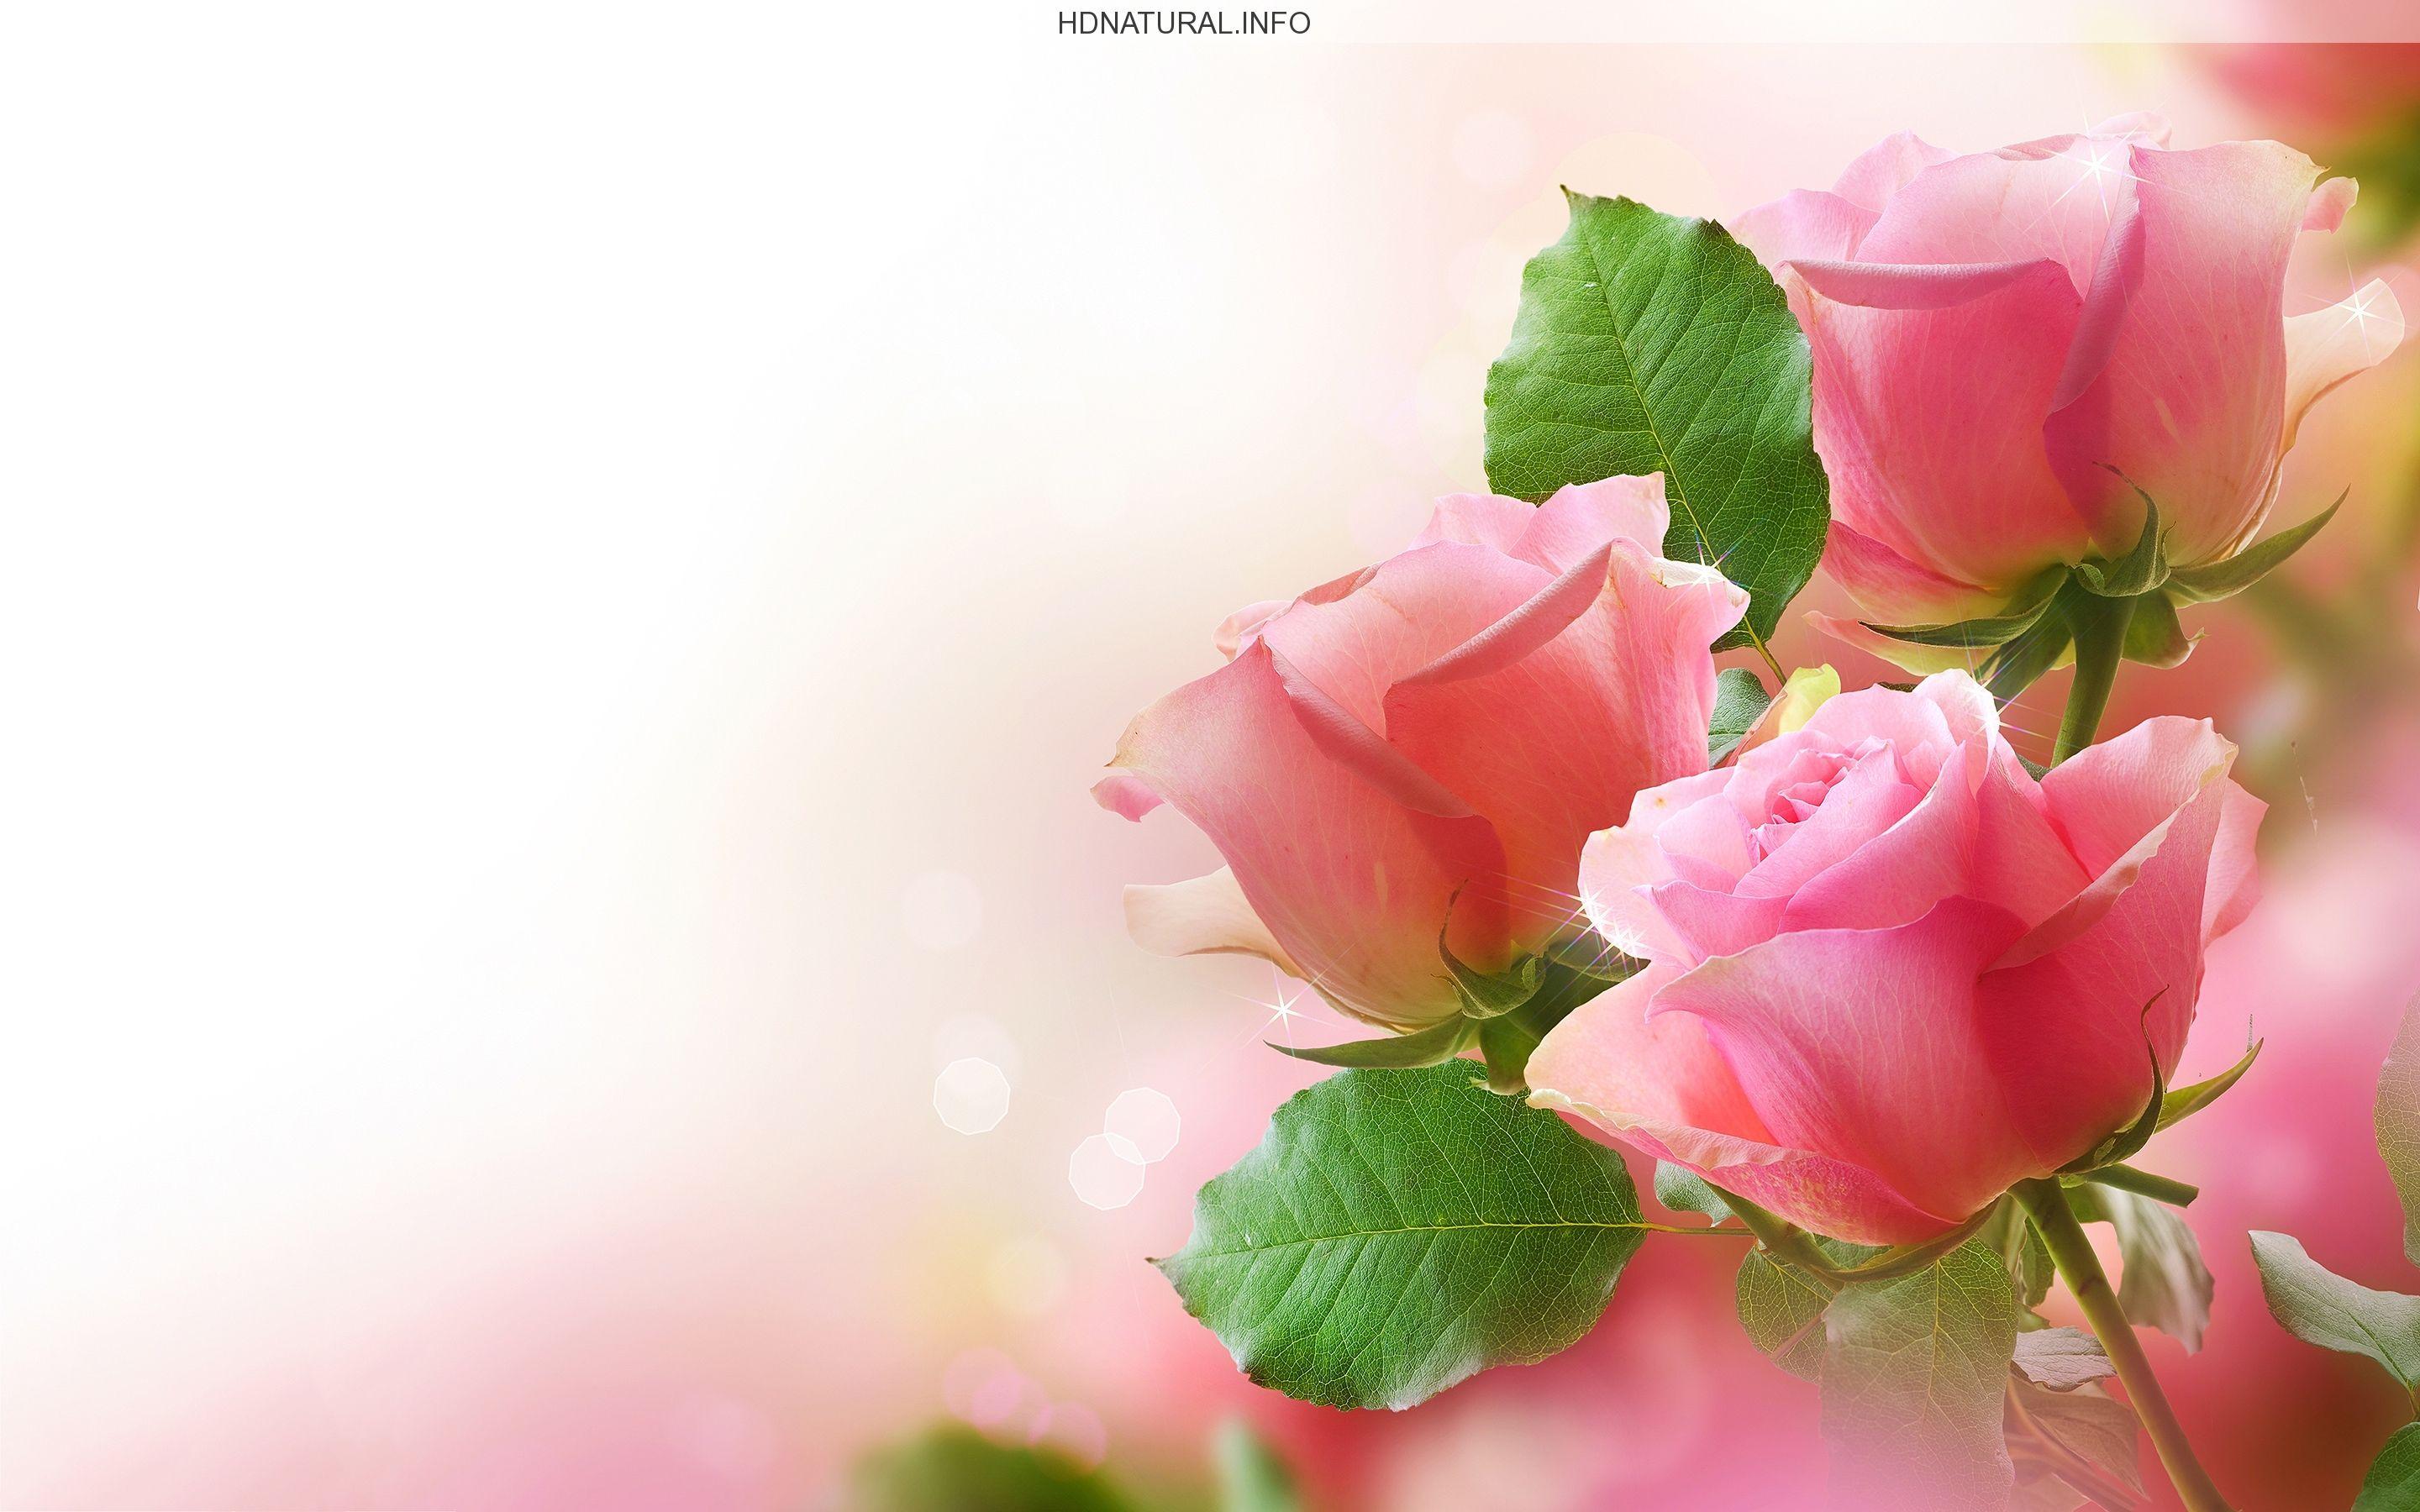 Pink Roses Background. Cabello y belleza